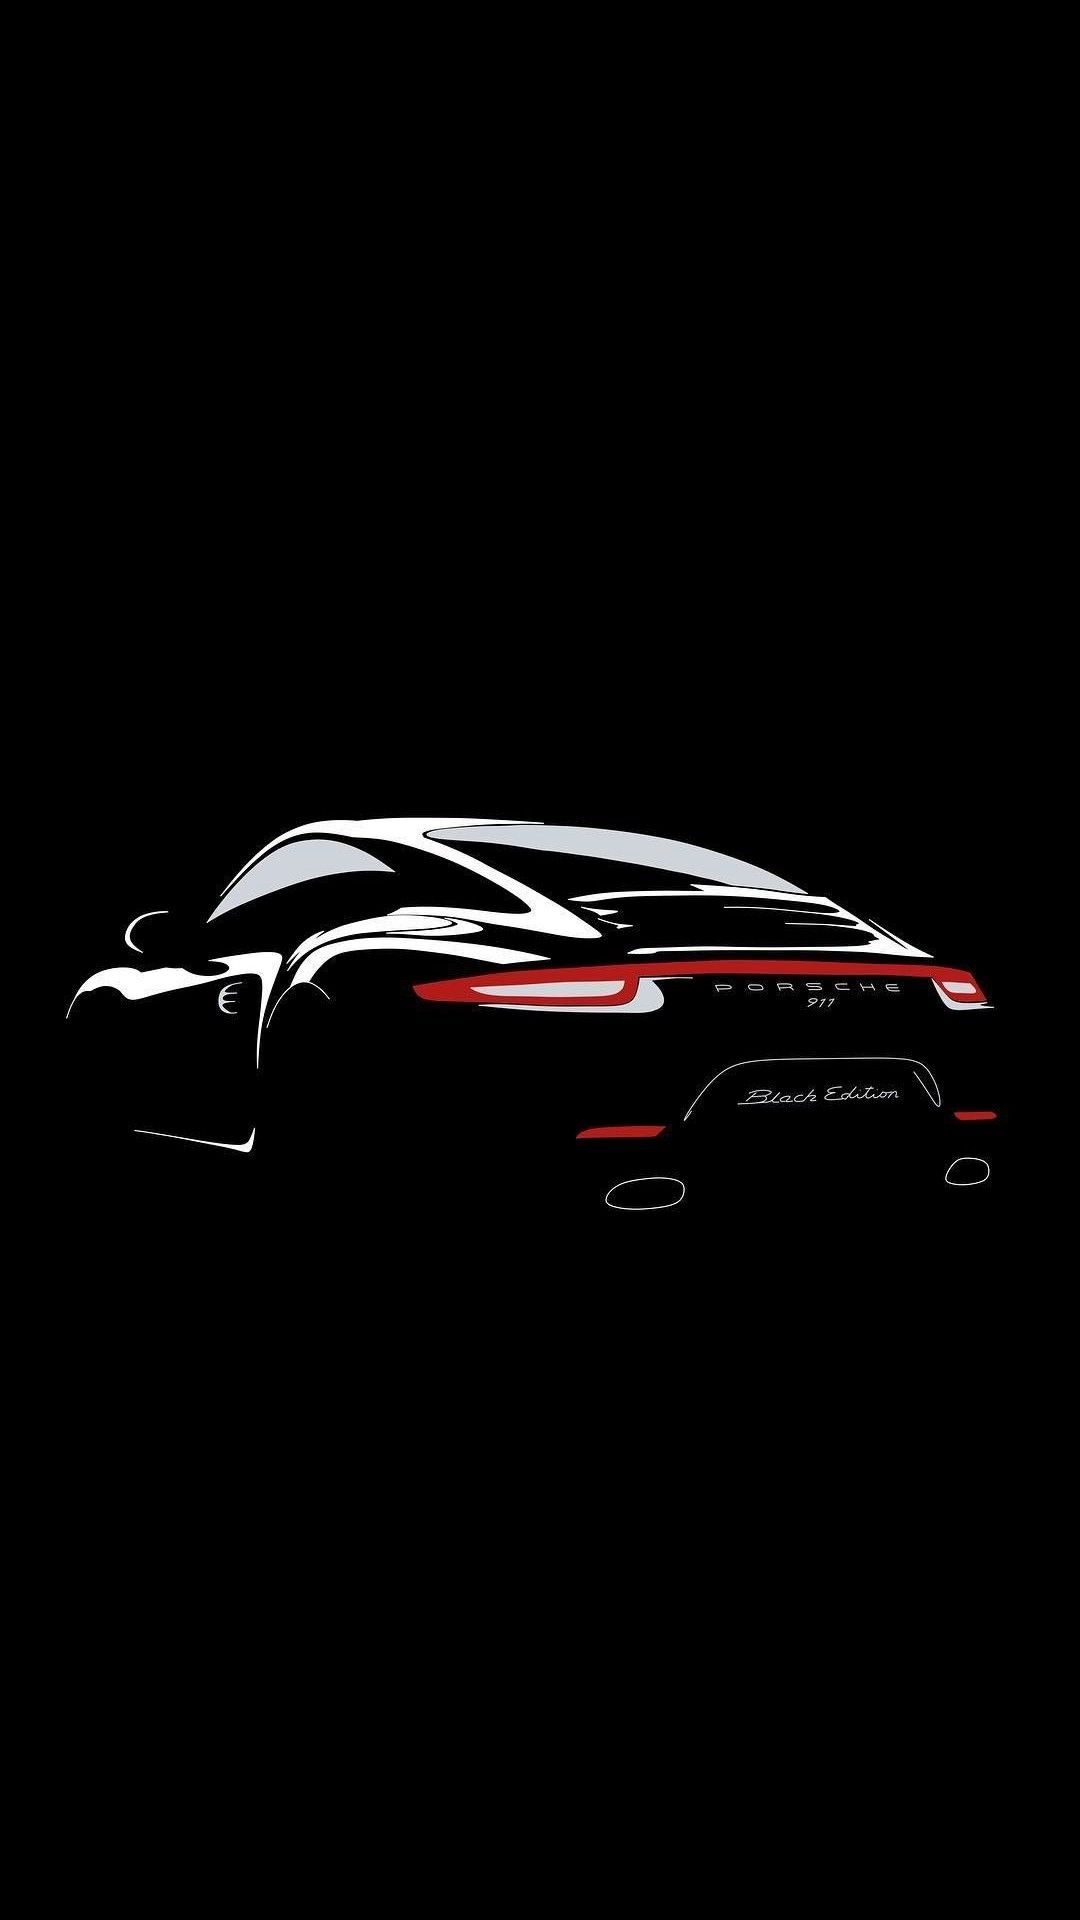 Jdm car. Porsche cars, Car wallpaper, Super luxury cars